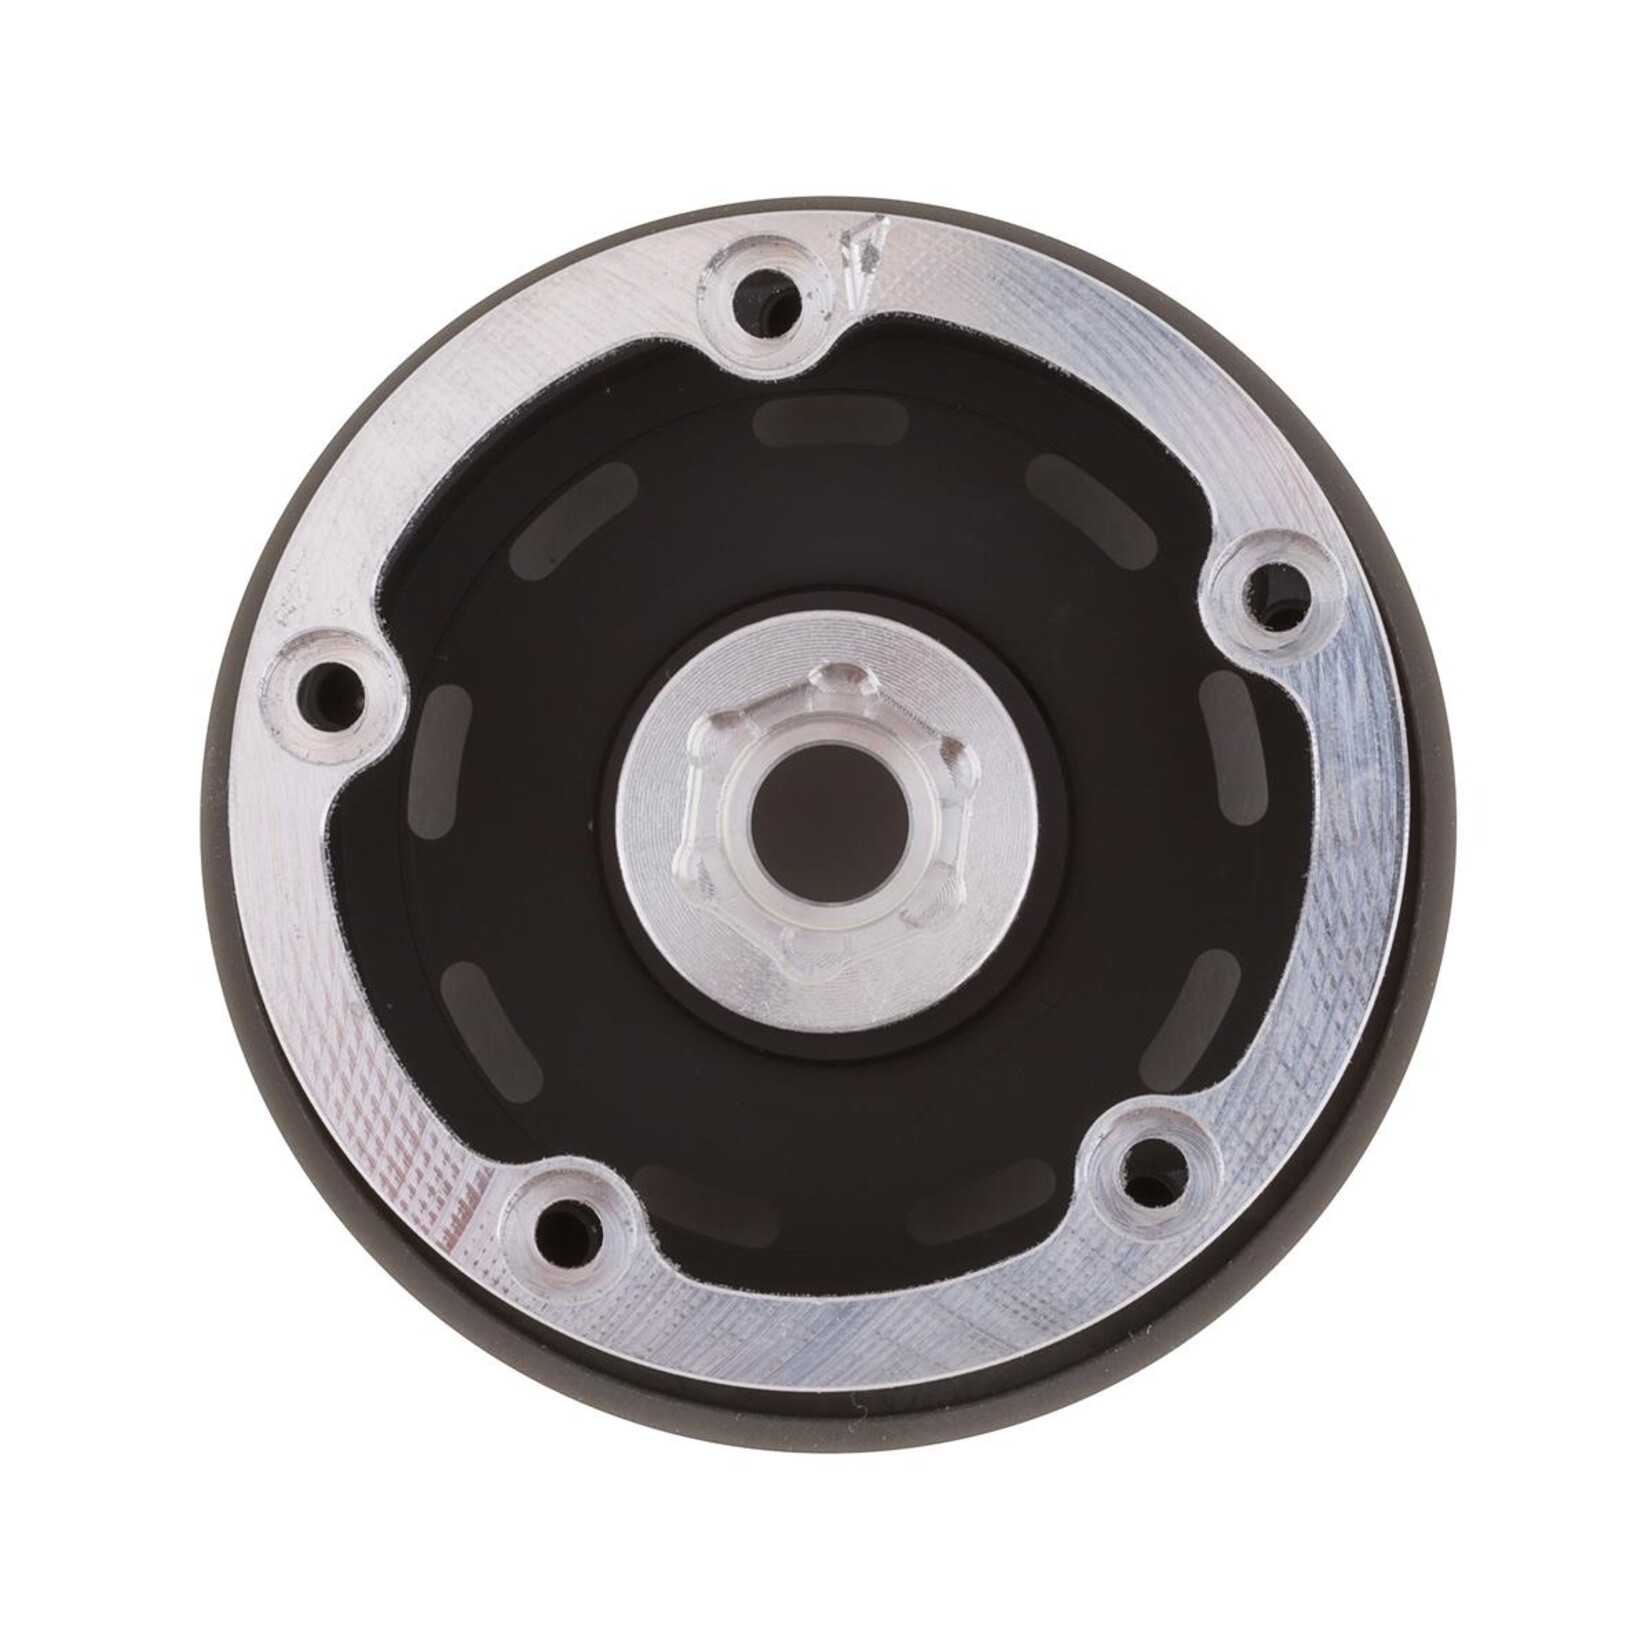 Incision Incision KMC XD720 Roswell 1.9" Beadlock Wheels (Black) (2) #IRC00240